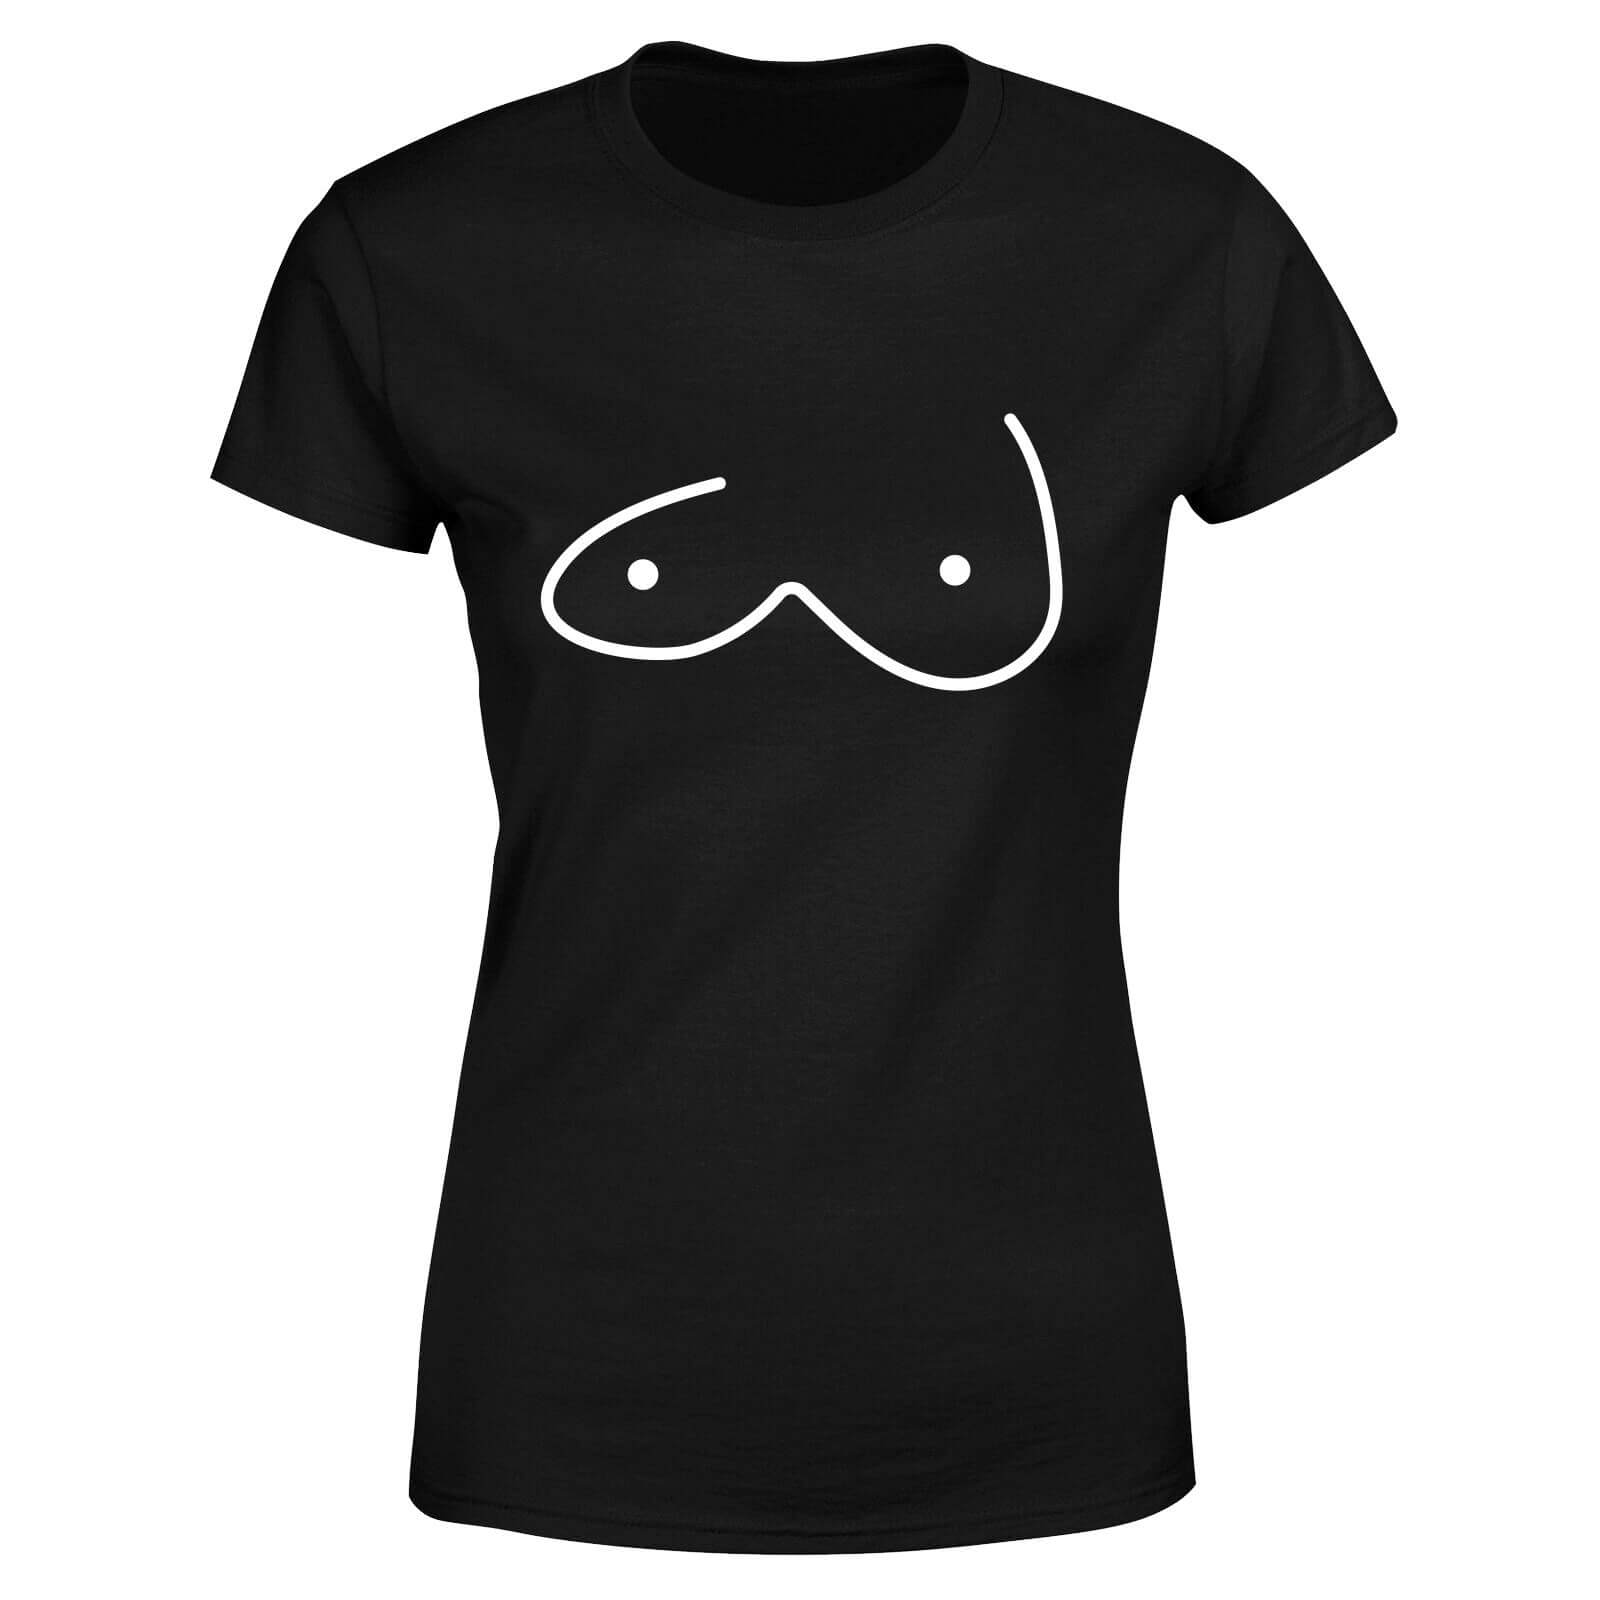 Wonkey Breasts Women's T-Shirt - Black - XS - Black